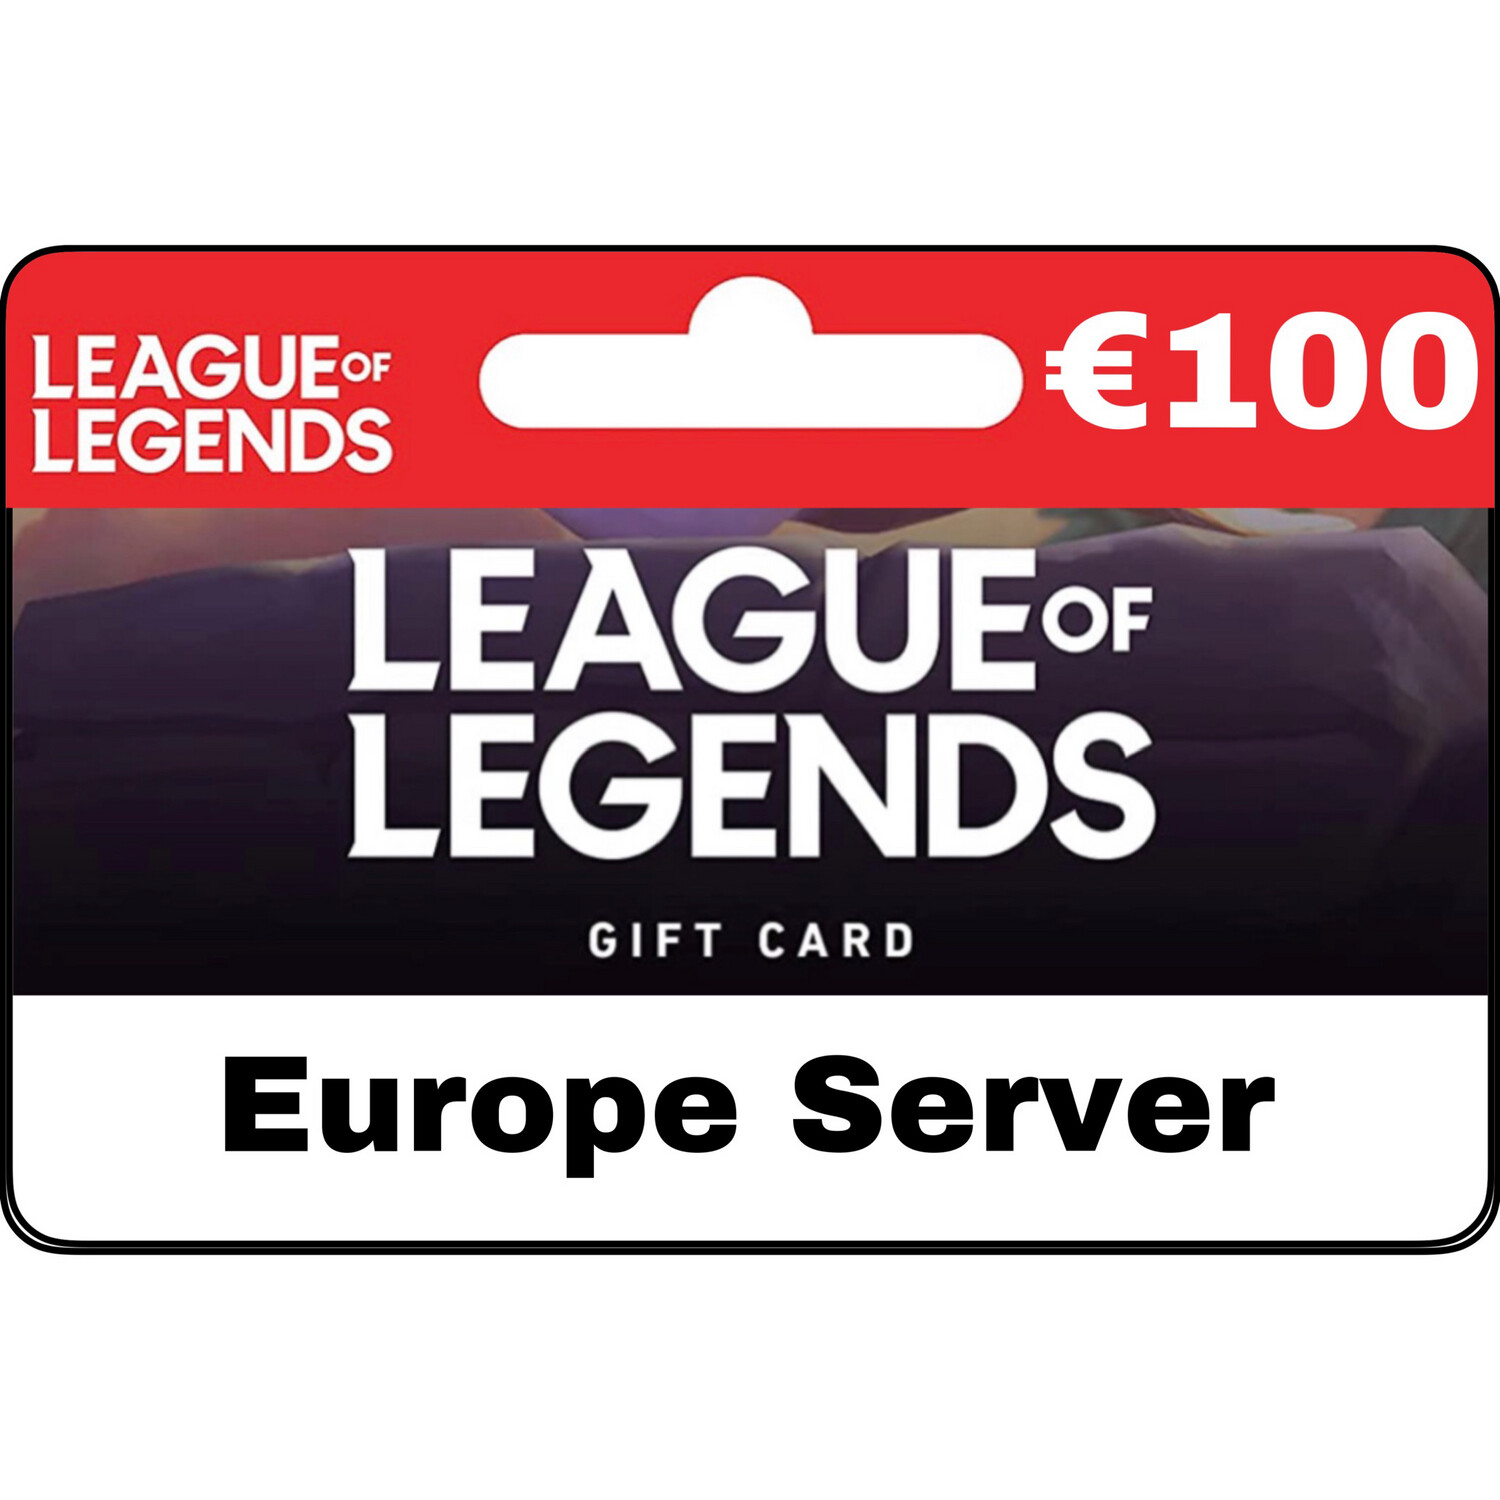 League of Legends EUR €100 Europe Server Gift Card